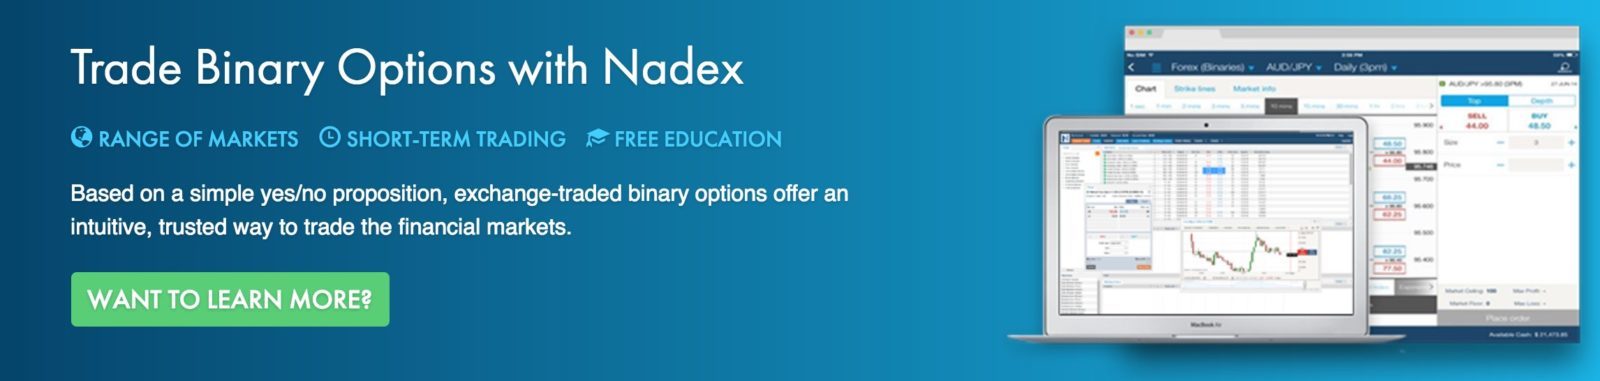 Nadex Review 2019-2020 — Is Nadex.com Scam or Legit?